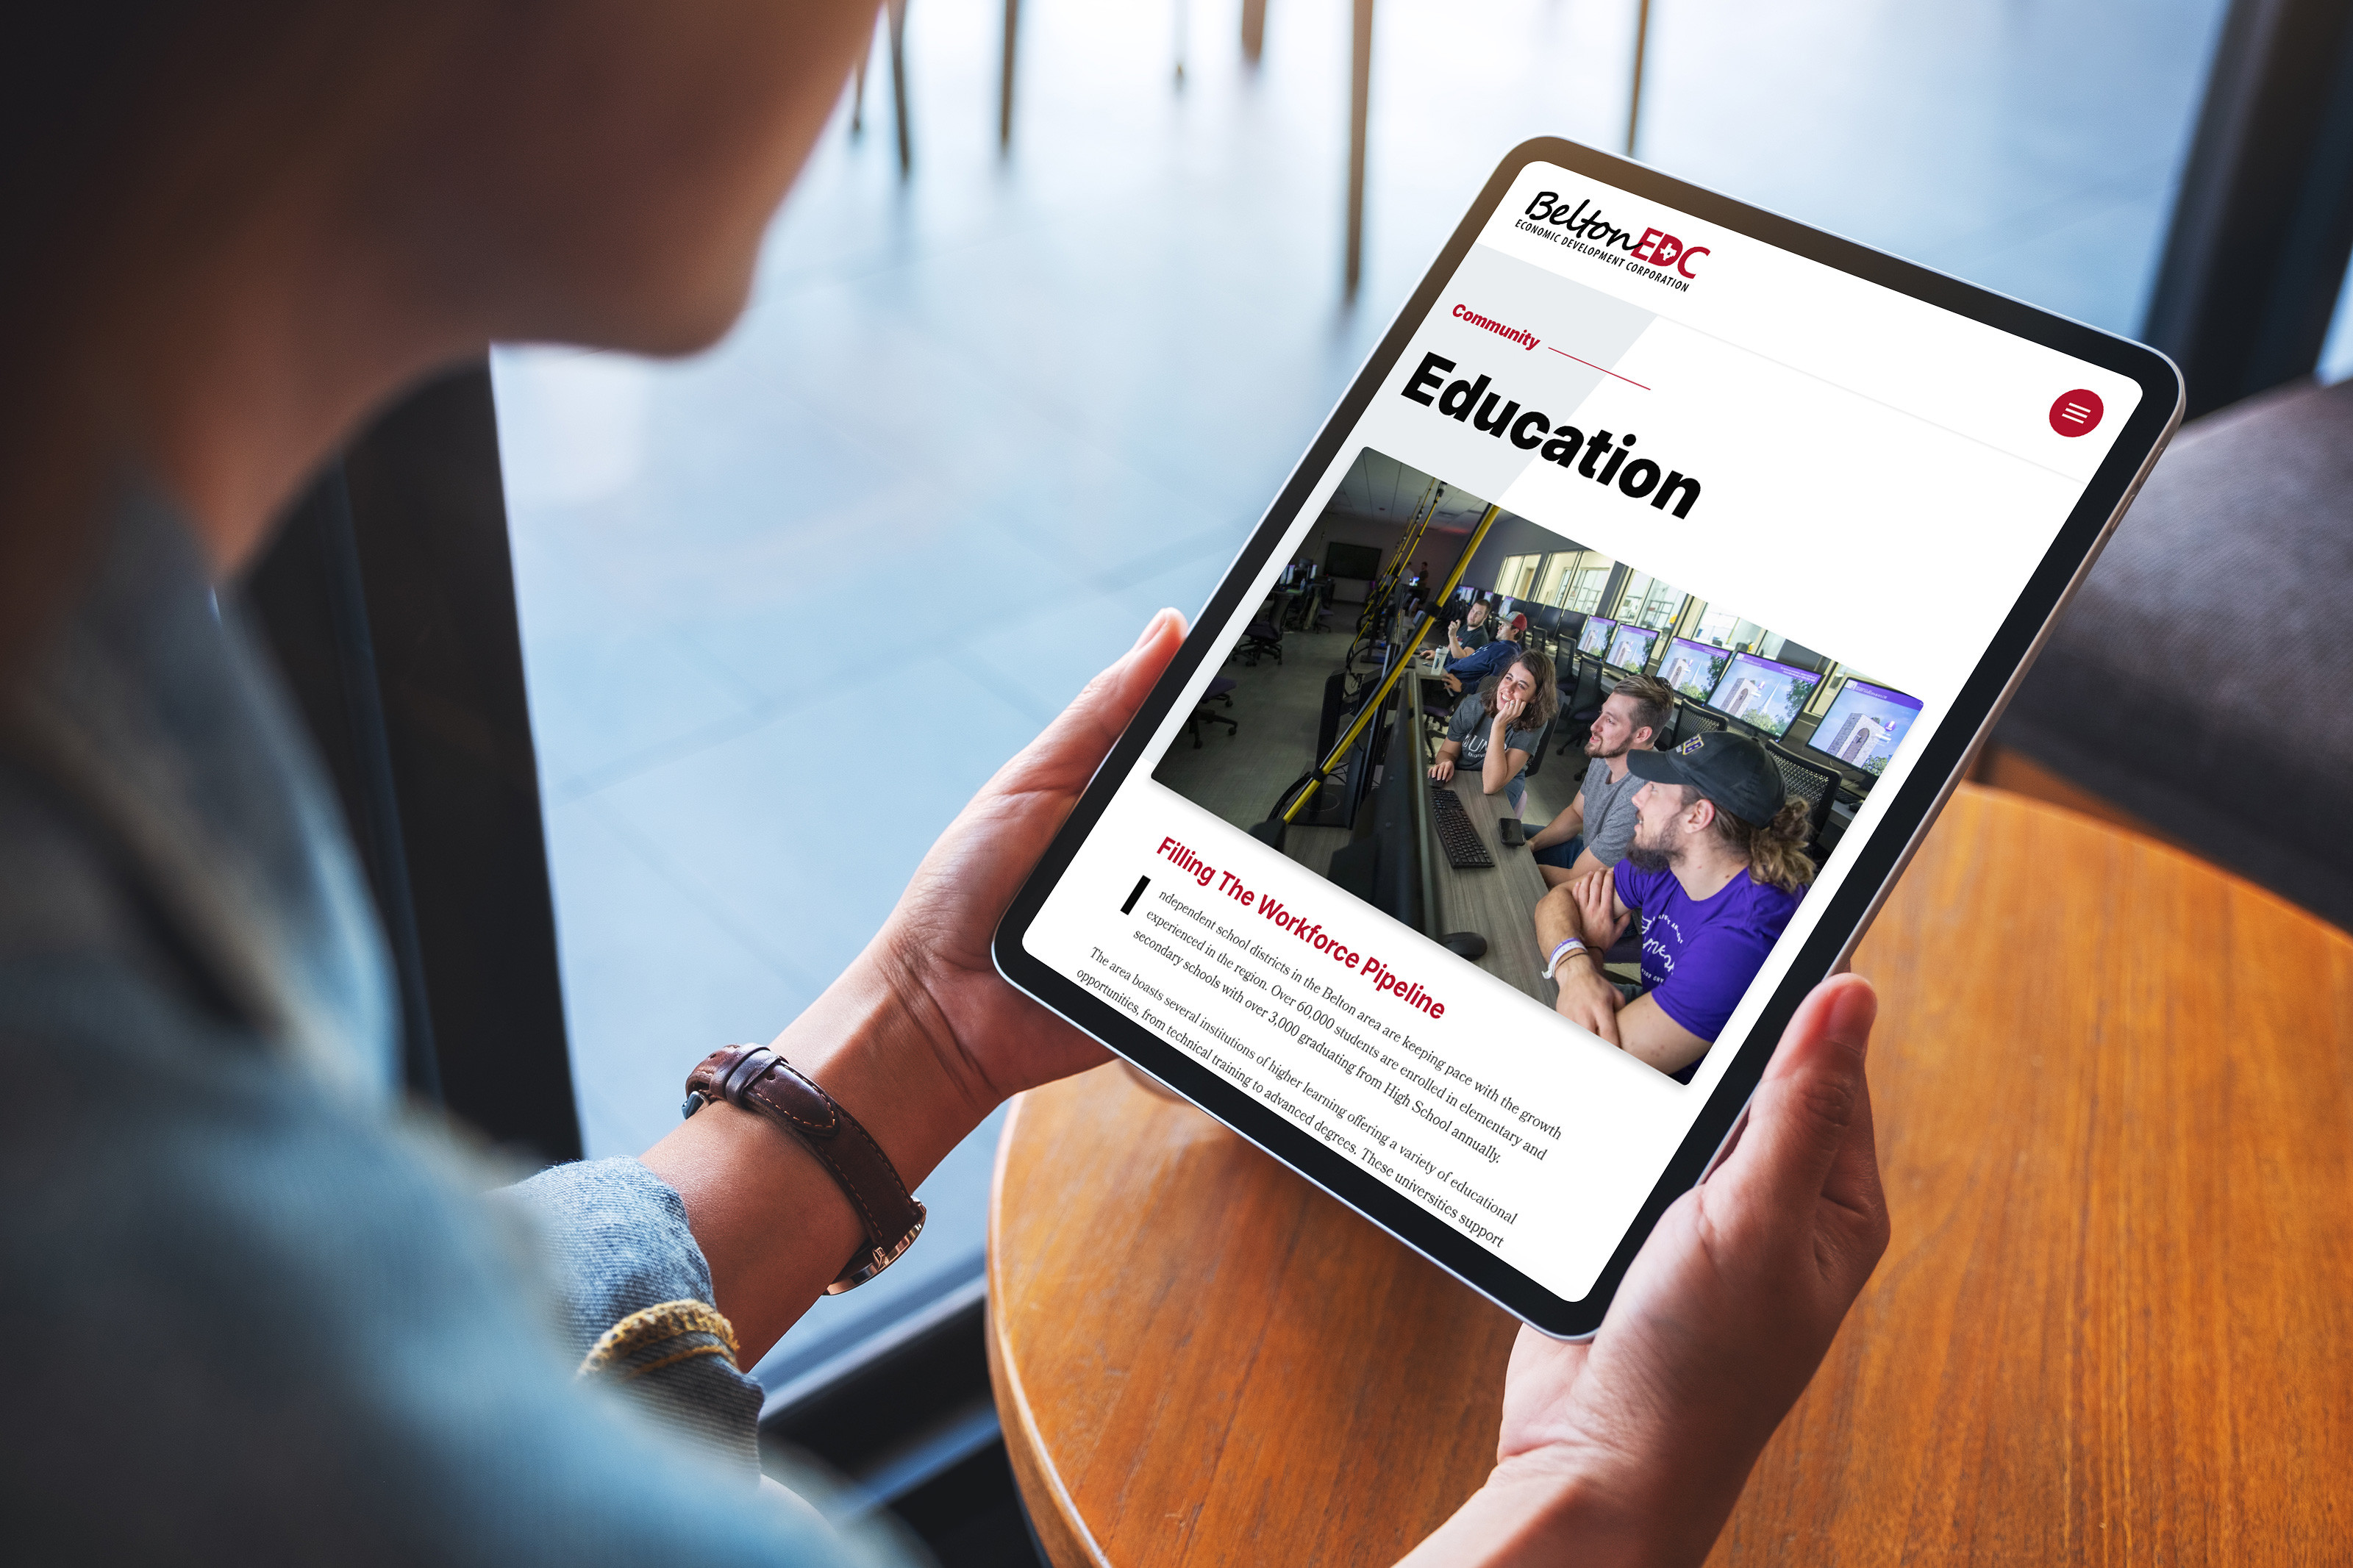 Belton EDC Education internal page on a tablet screen